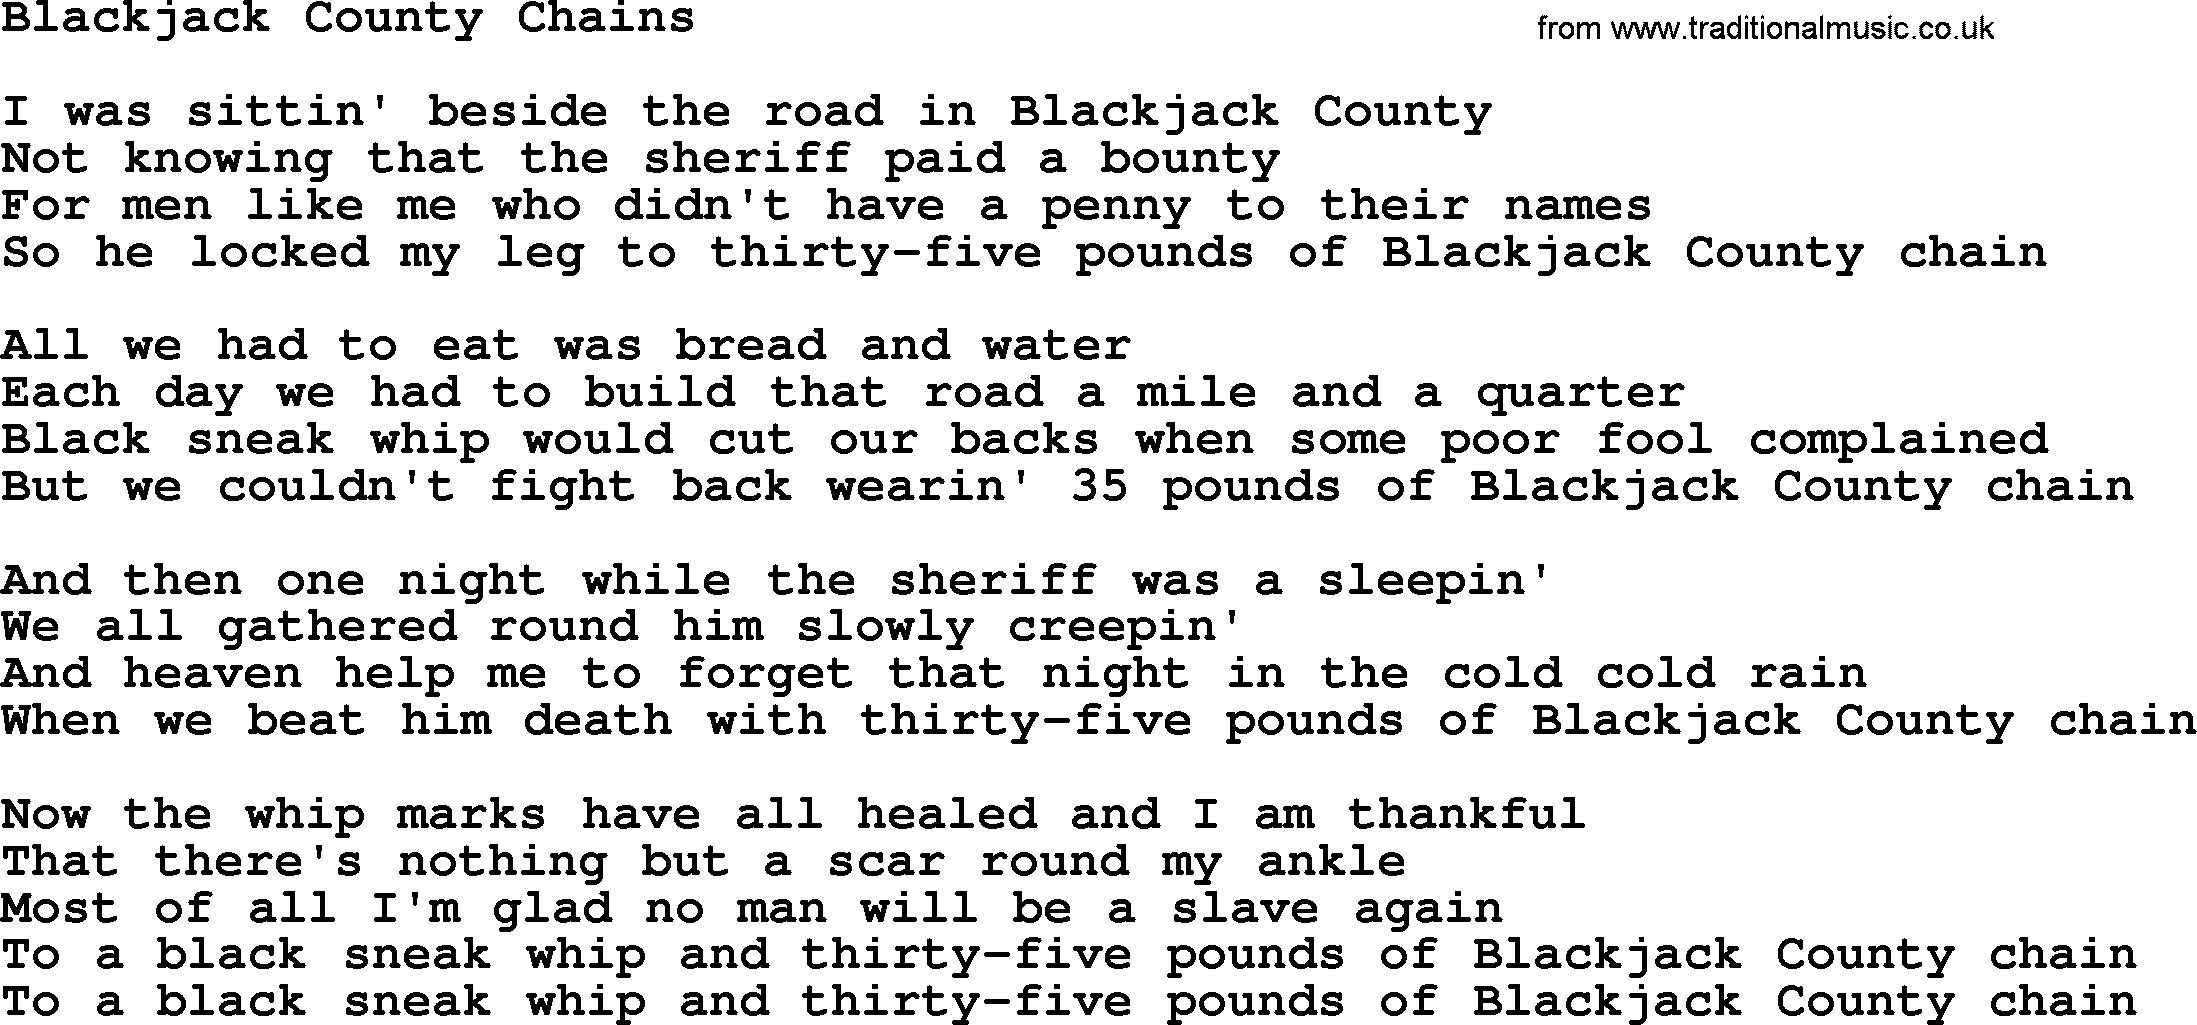 Willie Nelson song: Blackjack County Chains lyrics